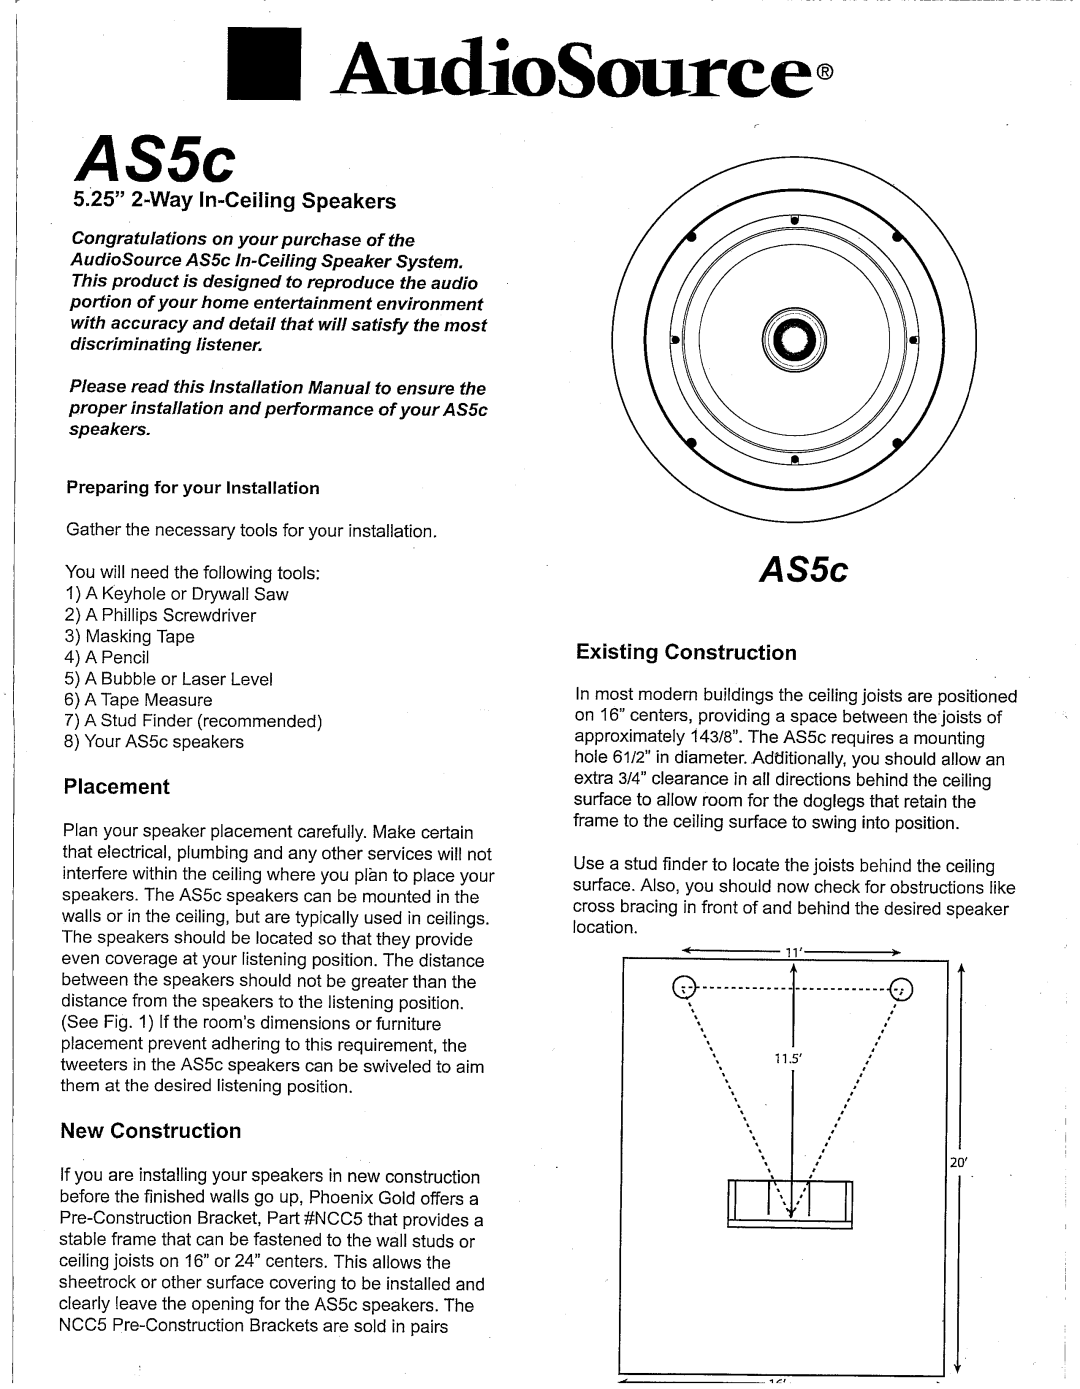 AudioSource AudioSource 5.25" 2-Way In-Ceiling Speakers manual 